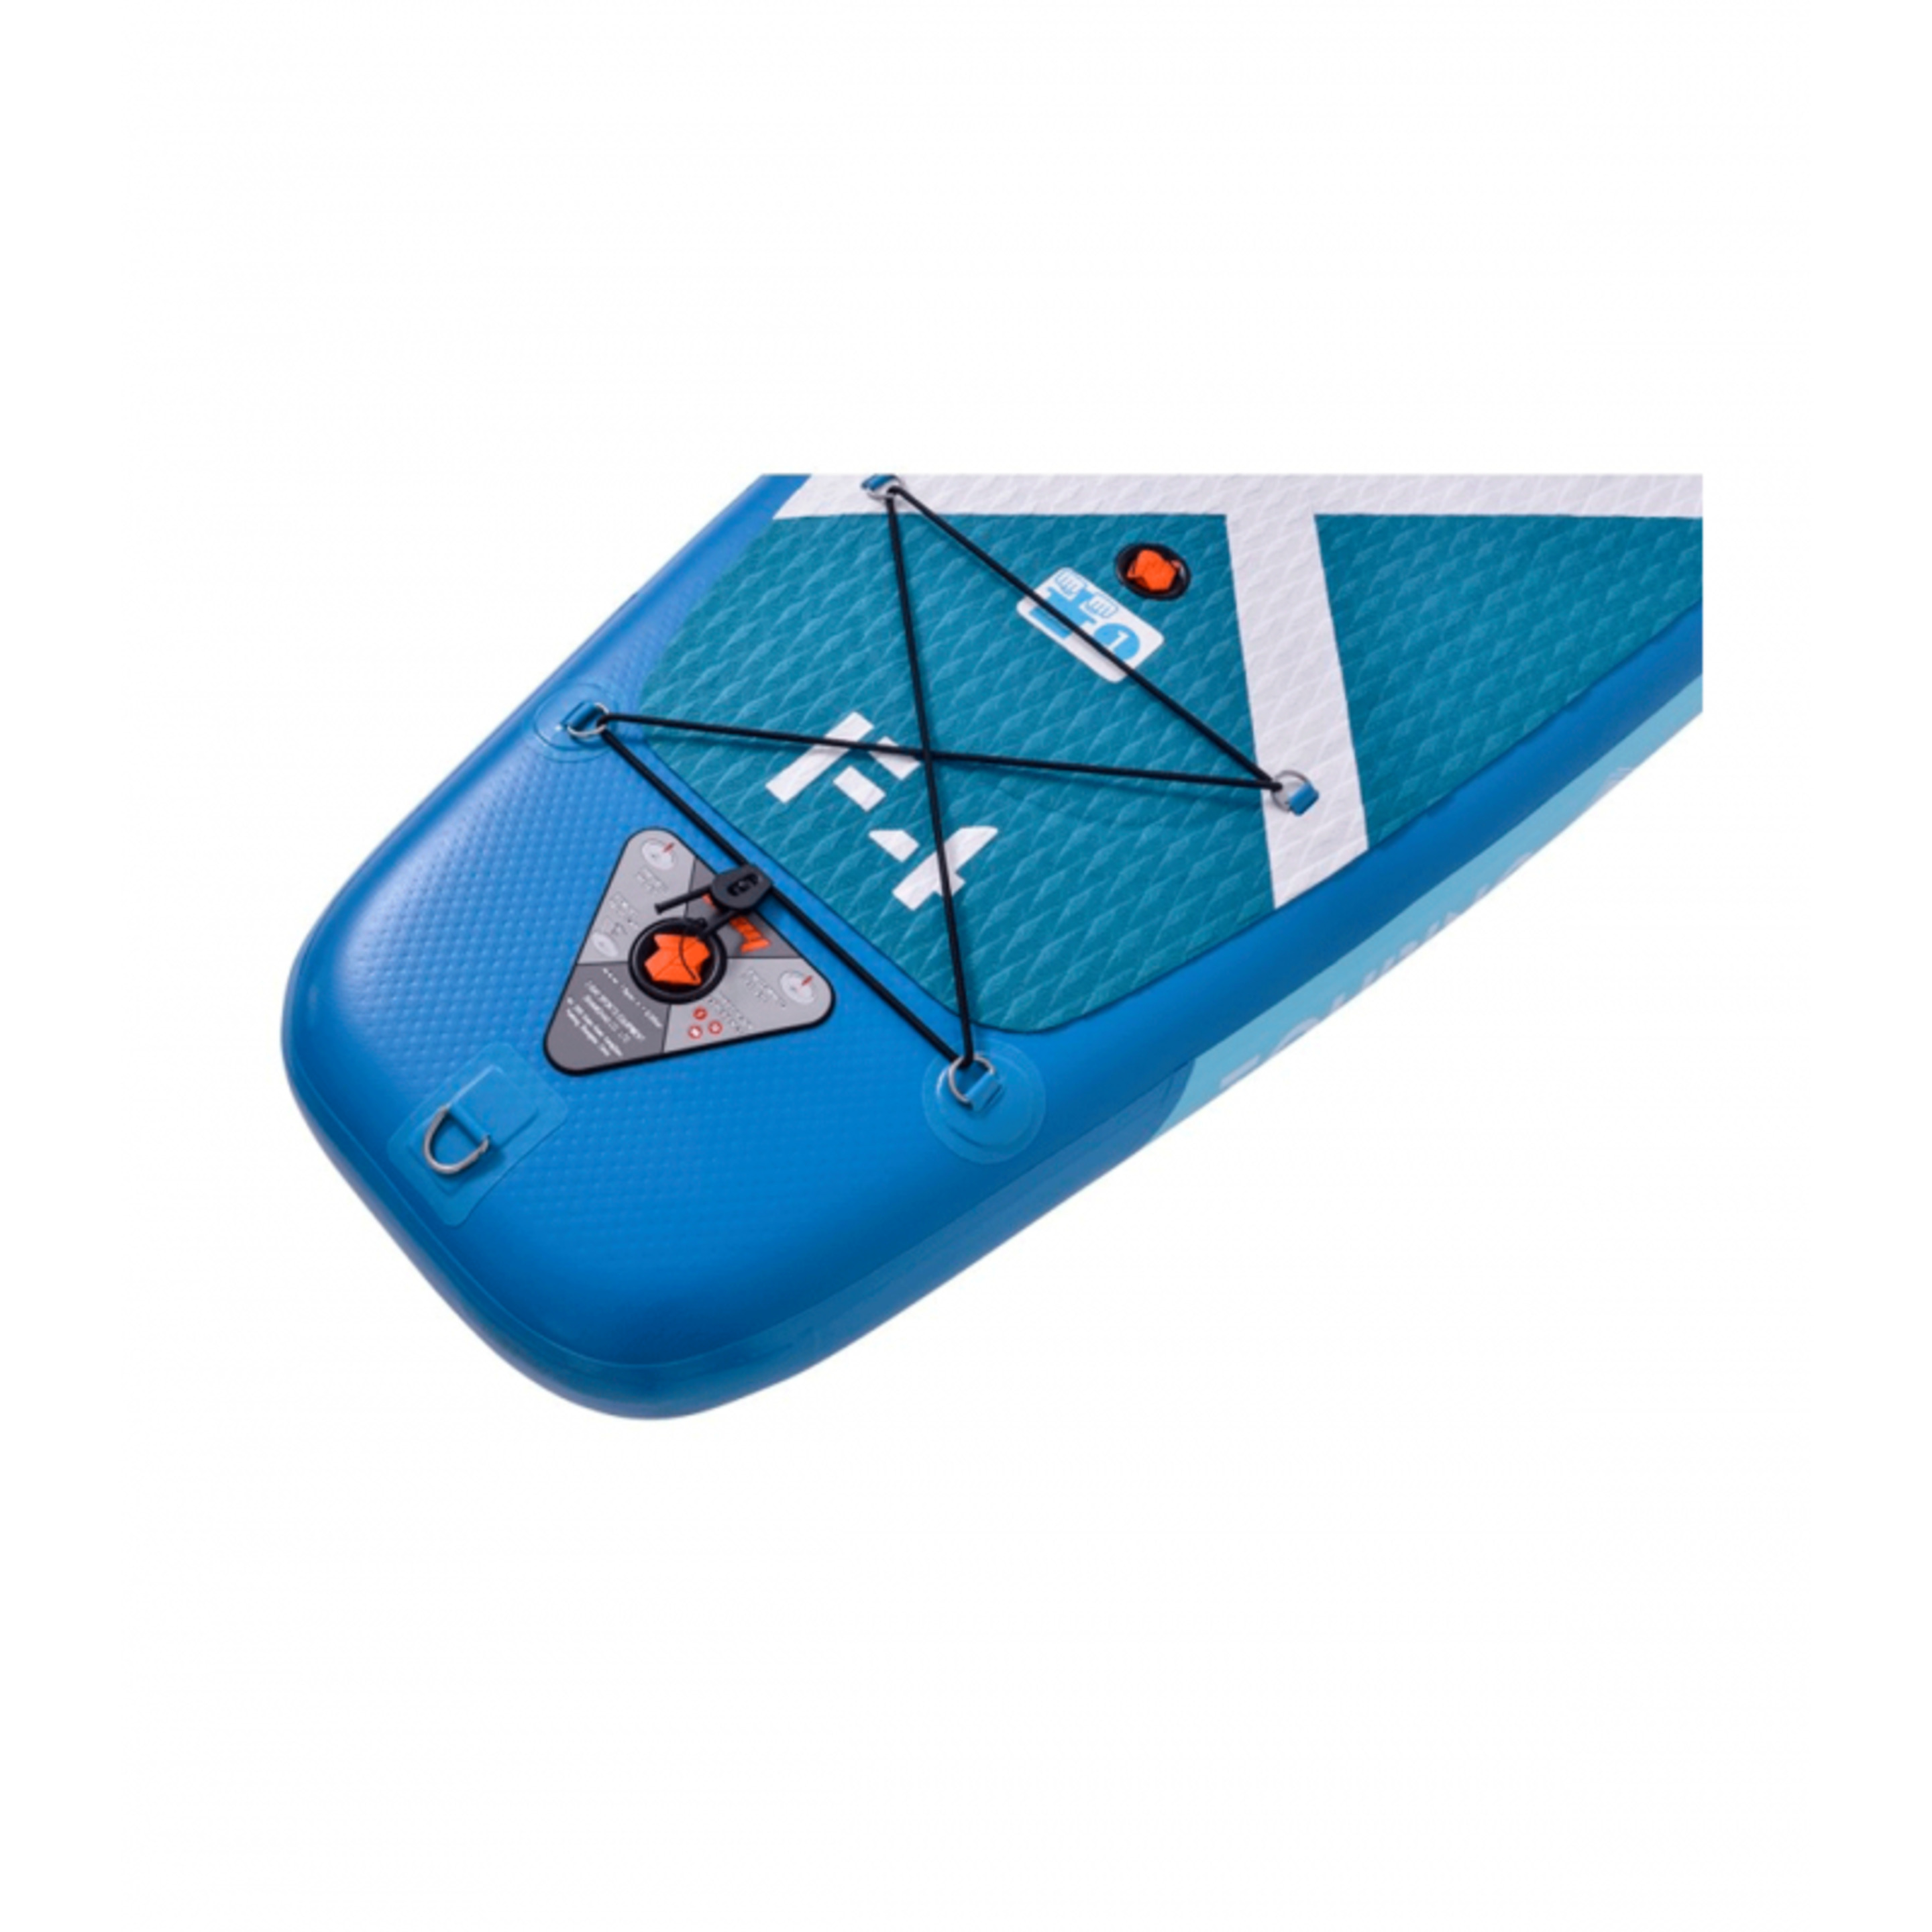 Tabla Paddle Surf Zray F4 Fury Epic Diseño 2021